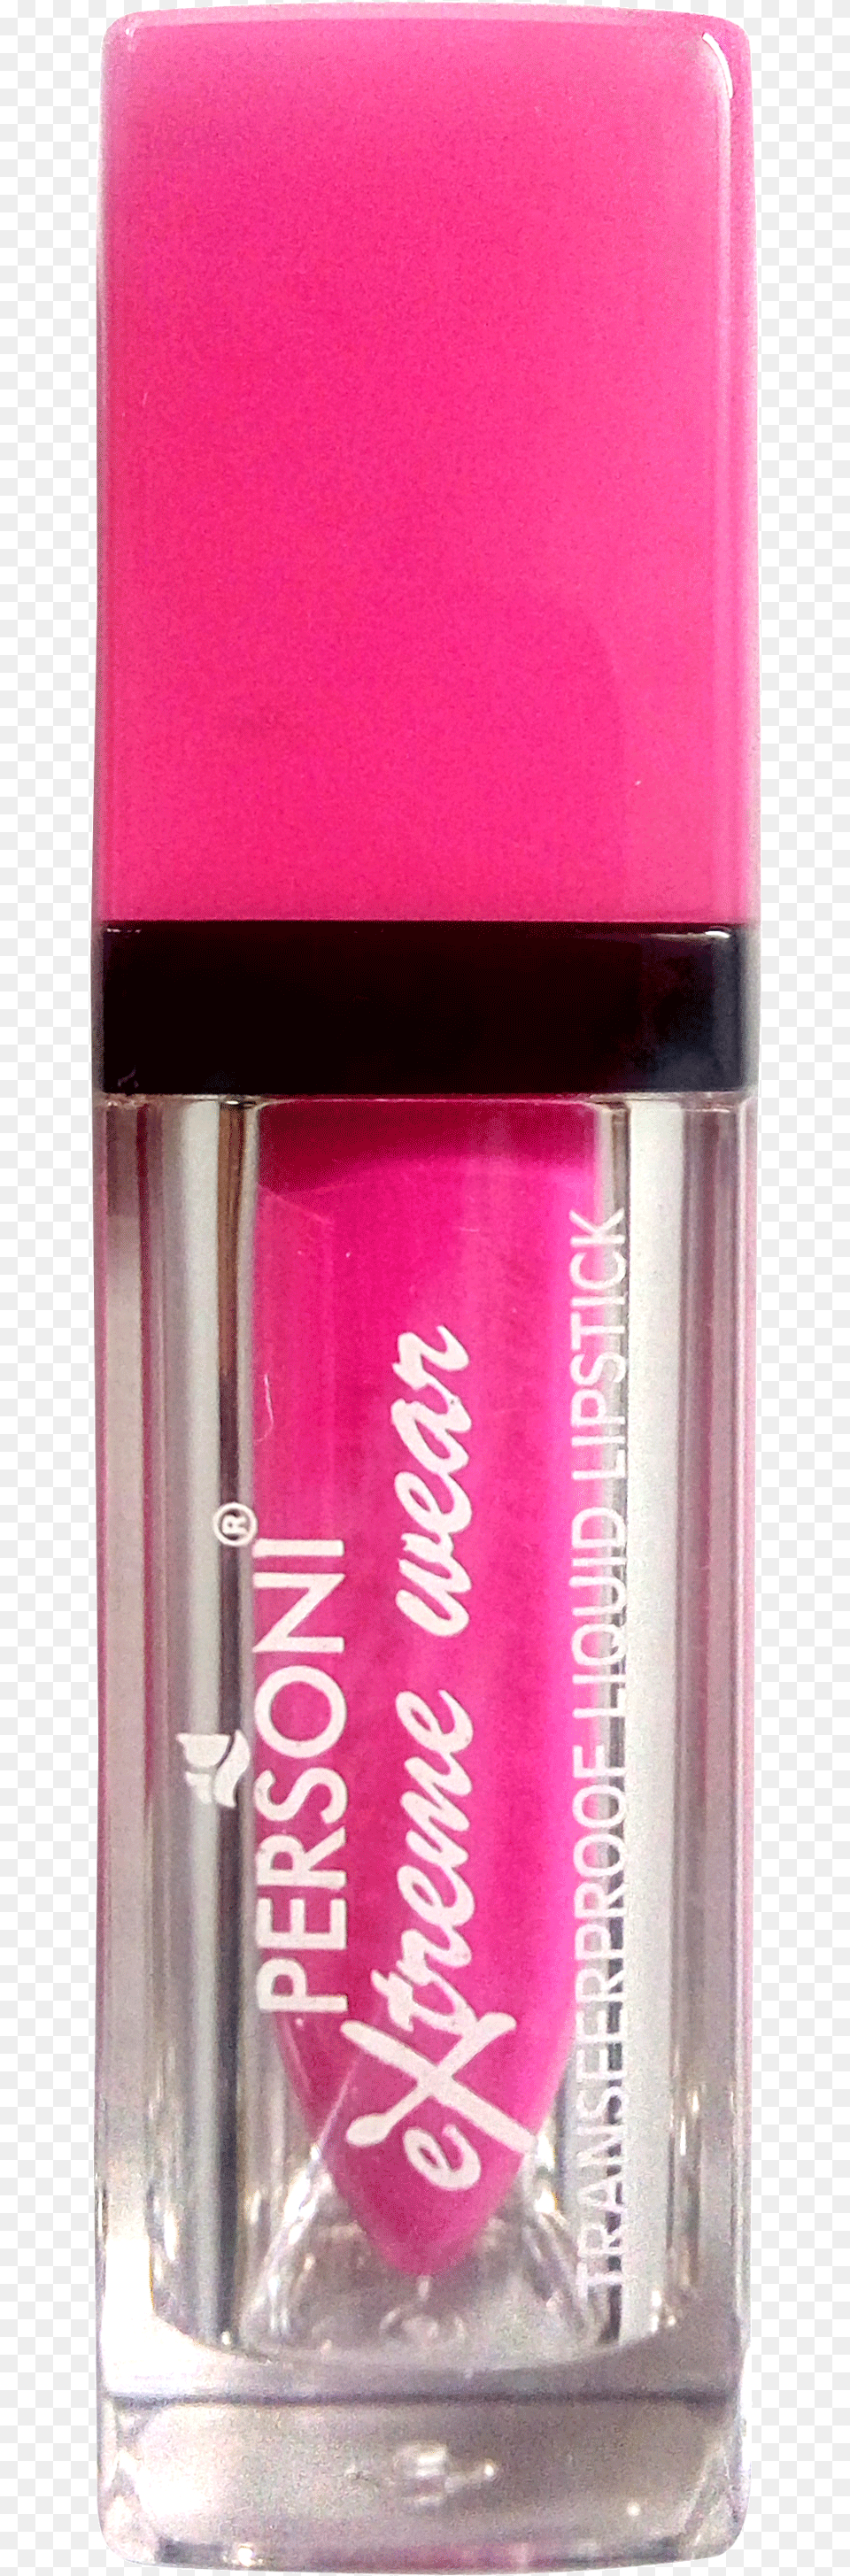 Pink Personi Liquid Lipstick, Cosmetics, Can, Tin Free Png